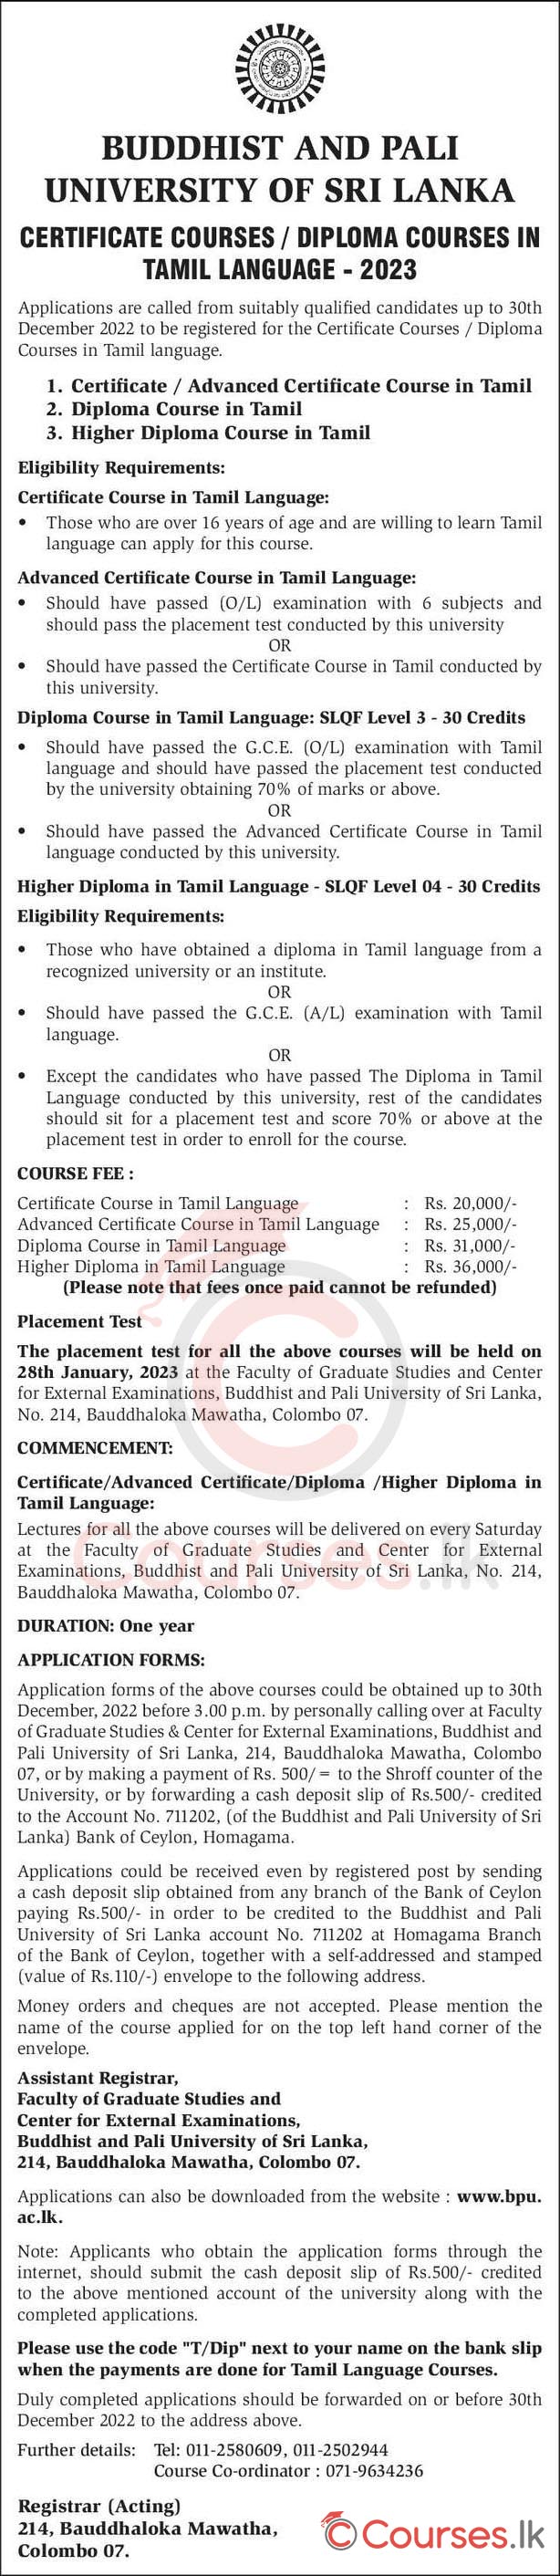 Tamil Language Courses (Diploma & Certificate) 2022/2023 - Buddhist and Pali University of Sri Lanka